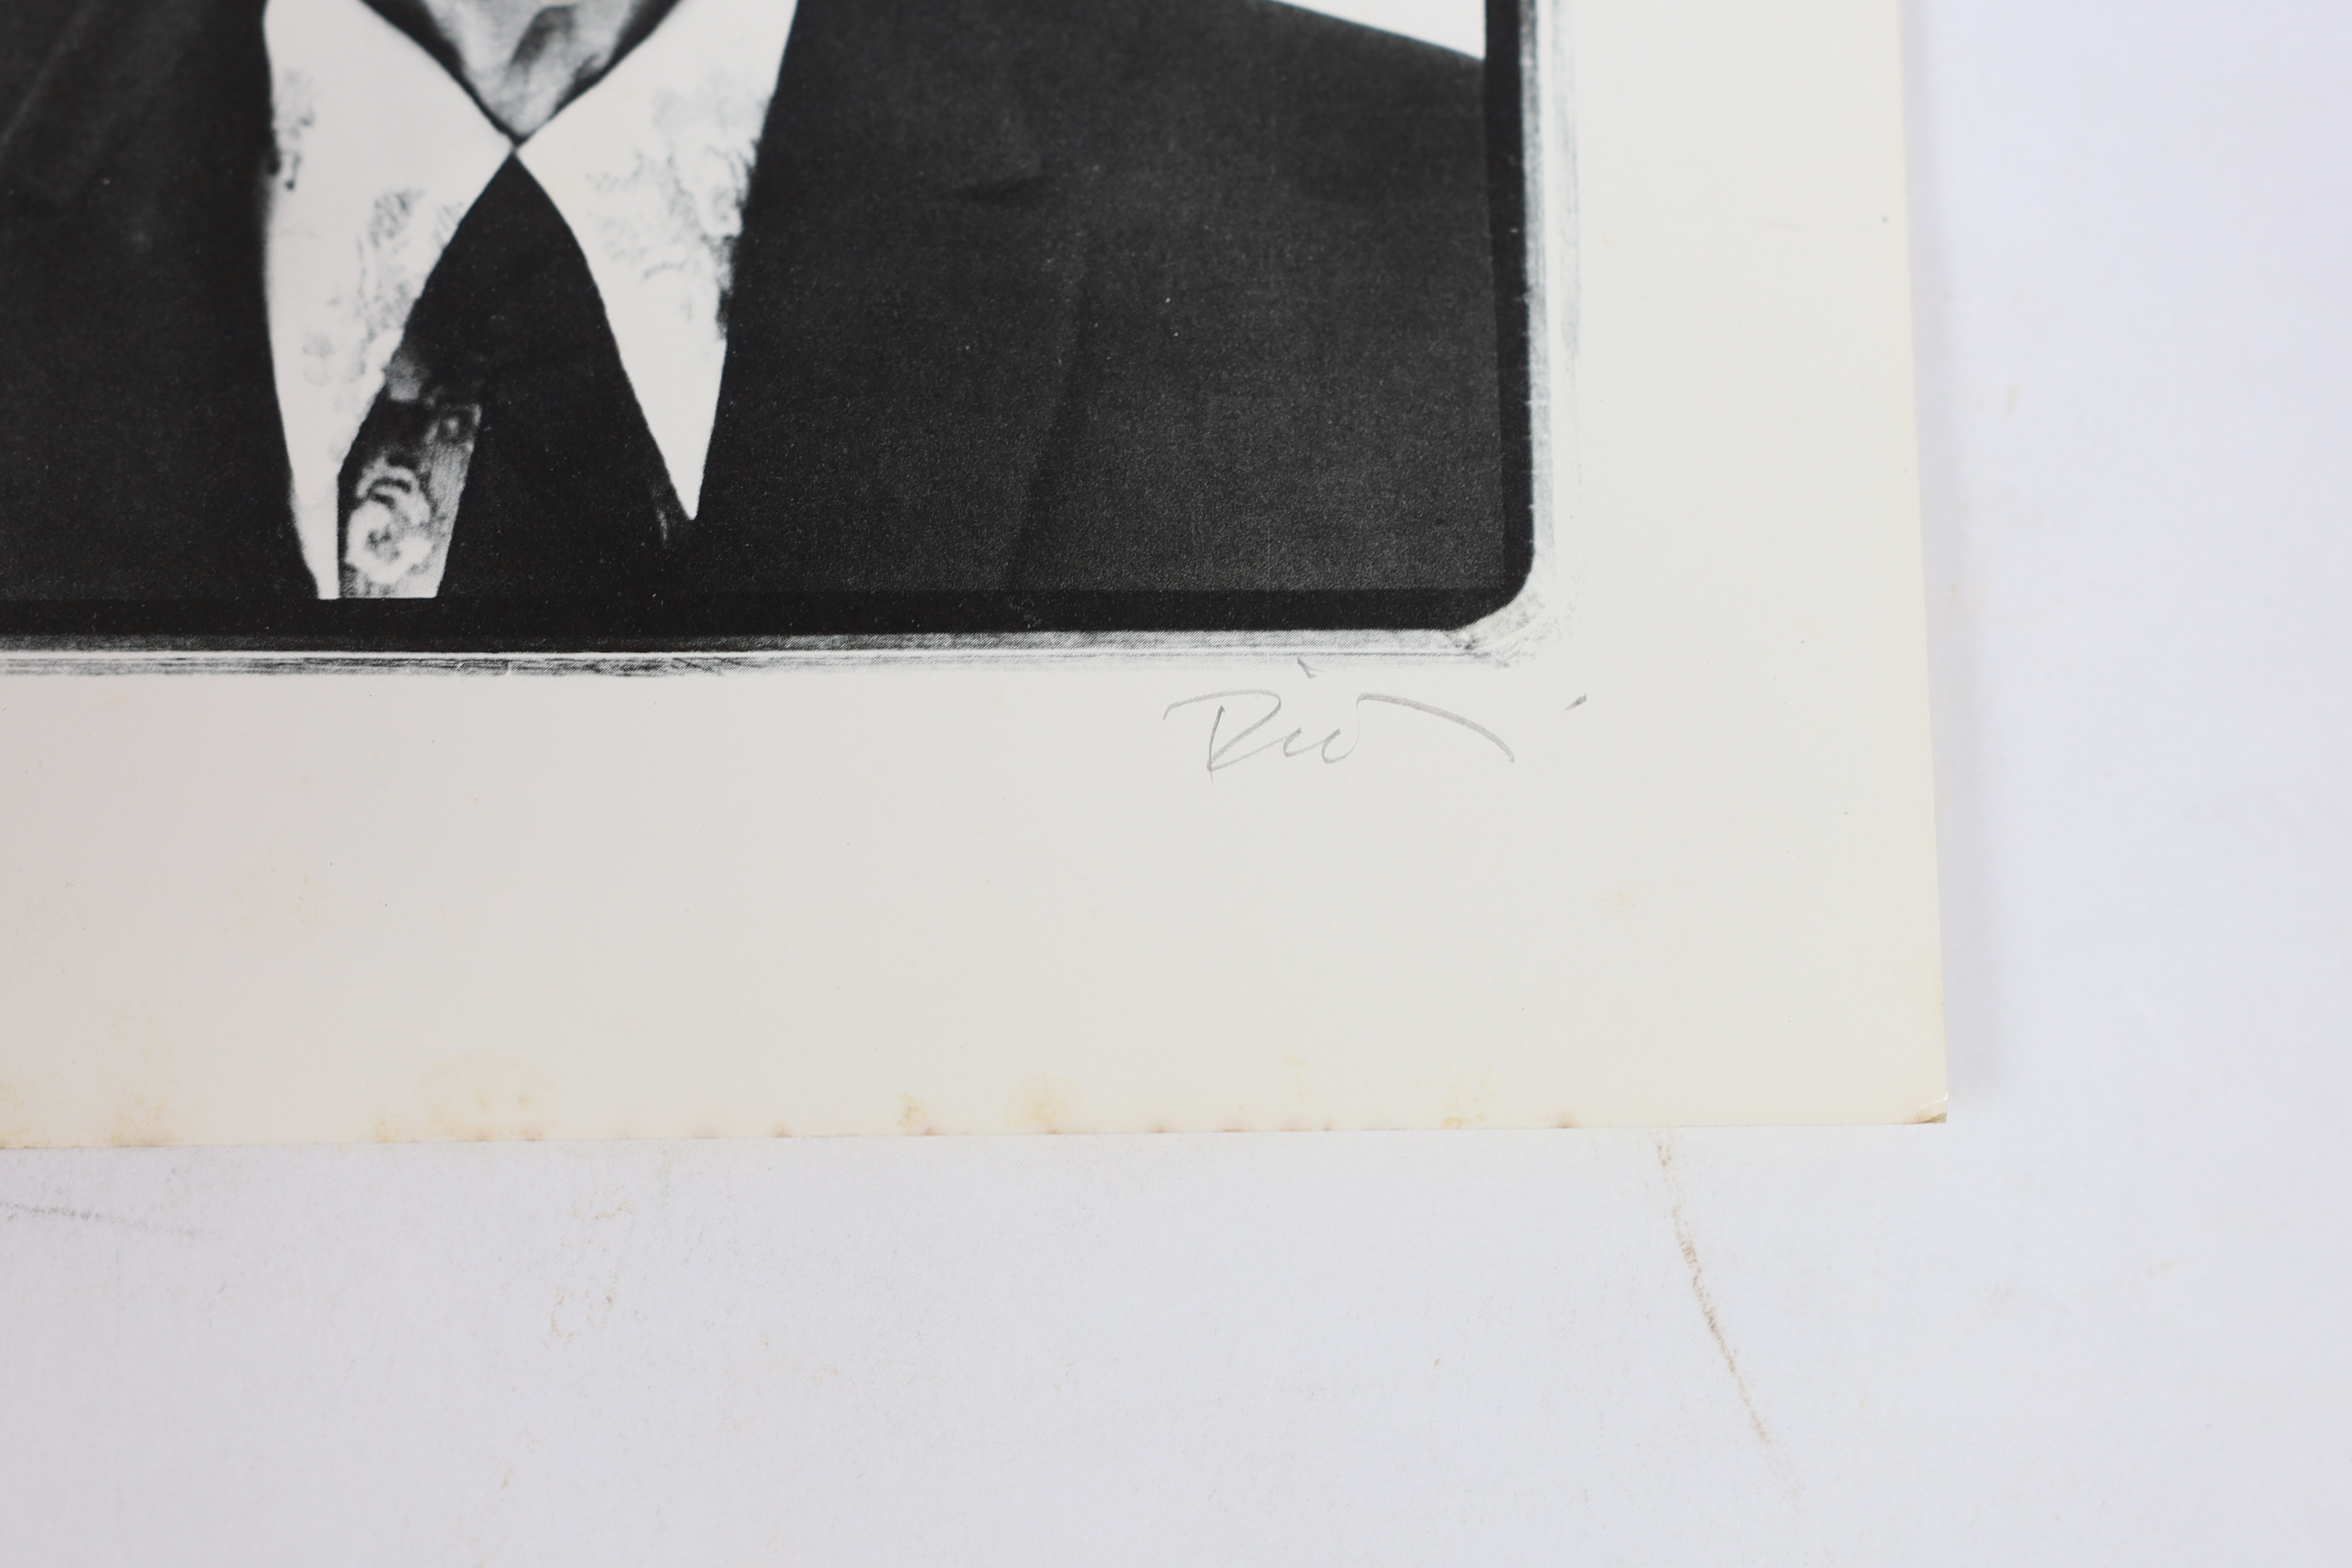 Richard Avedon (American, 1923-2004), 'Jacob Israel Avedon photography by Richard Avedon, Museum of Modern Art, New York 1974', invitation to the Exhibition and an Exhibition poster, poster 64 x 57cm, invitation 18 x 18c